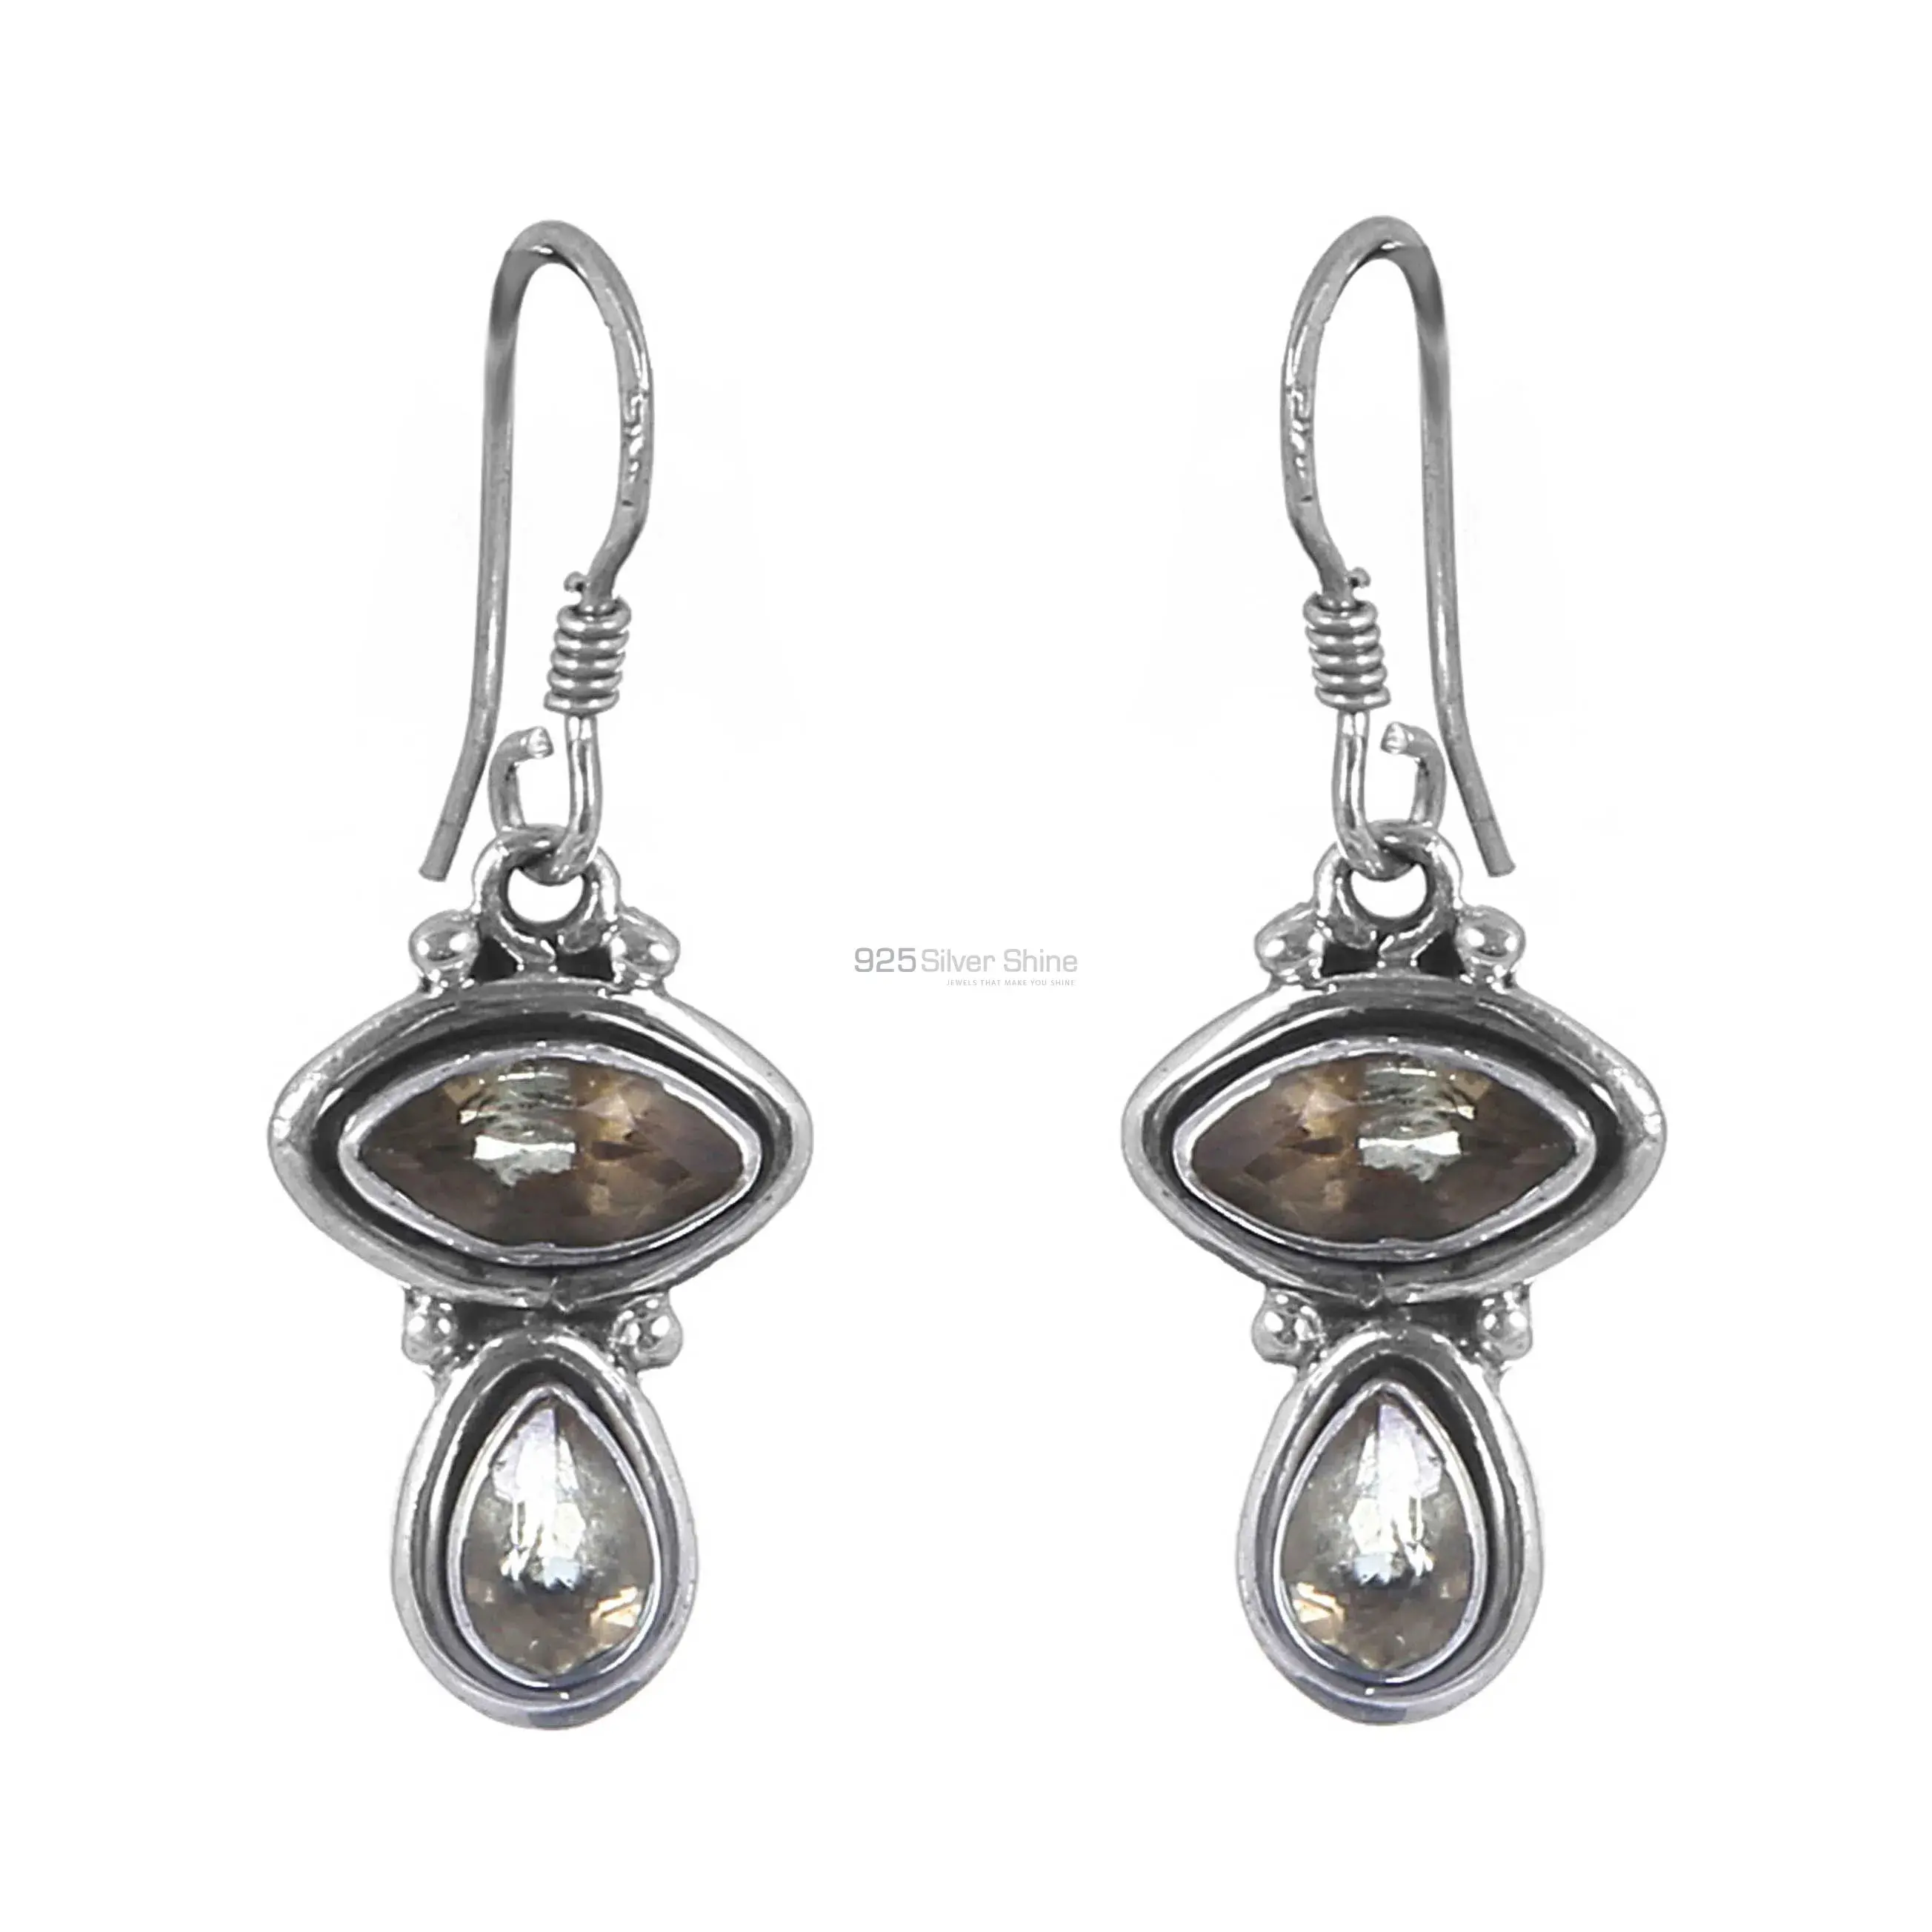 Wholesale 925 Sterling Silver Earrings In Citrine Gemstone 925SE156